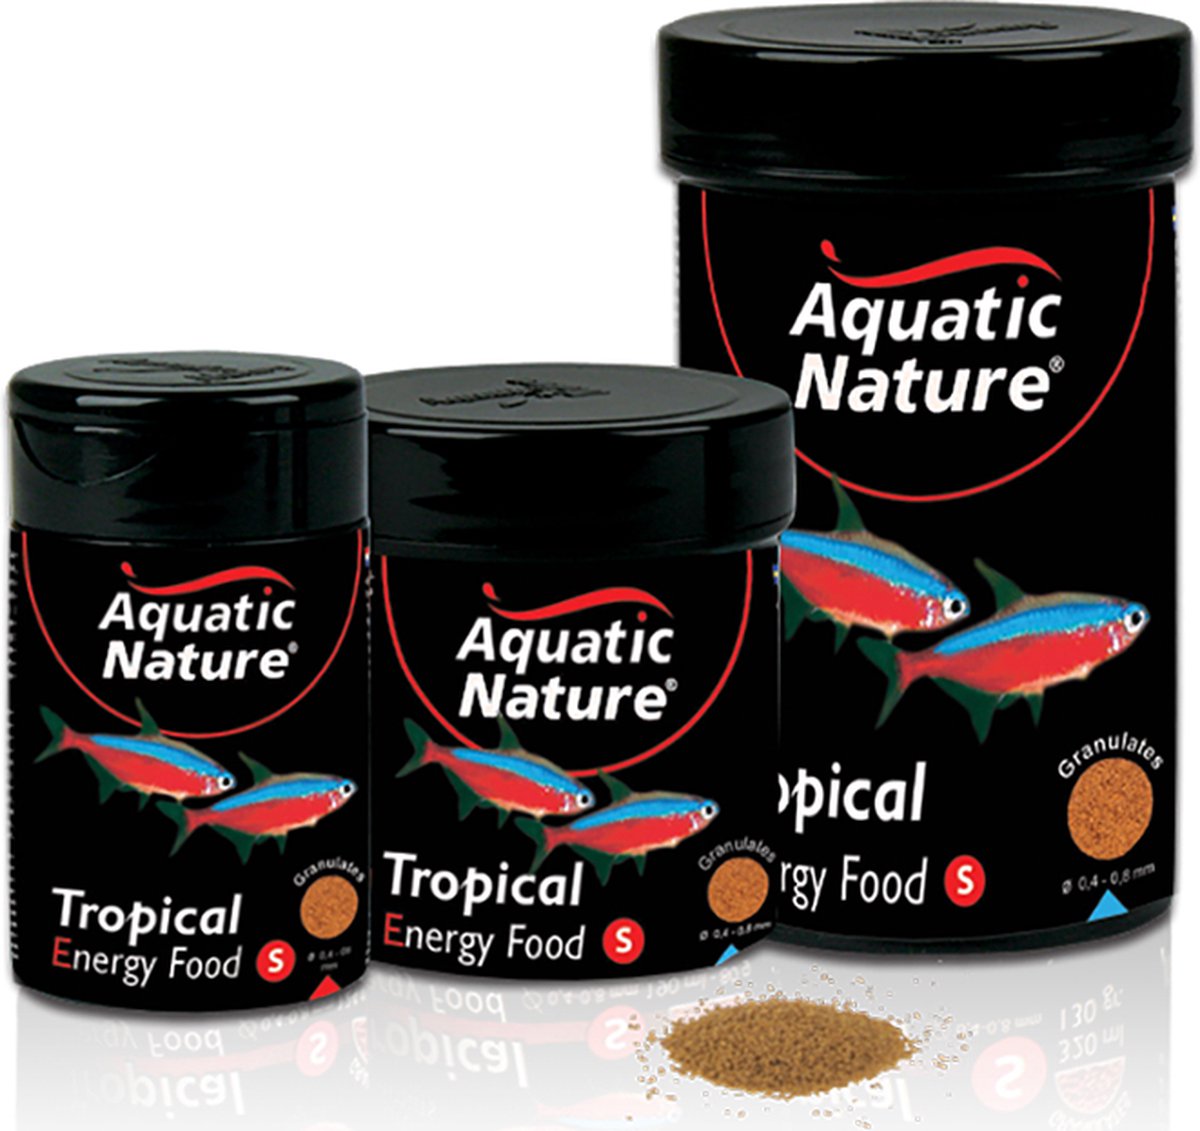 aquatic nature tropical energy food S 124ml